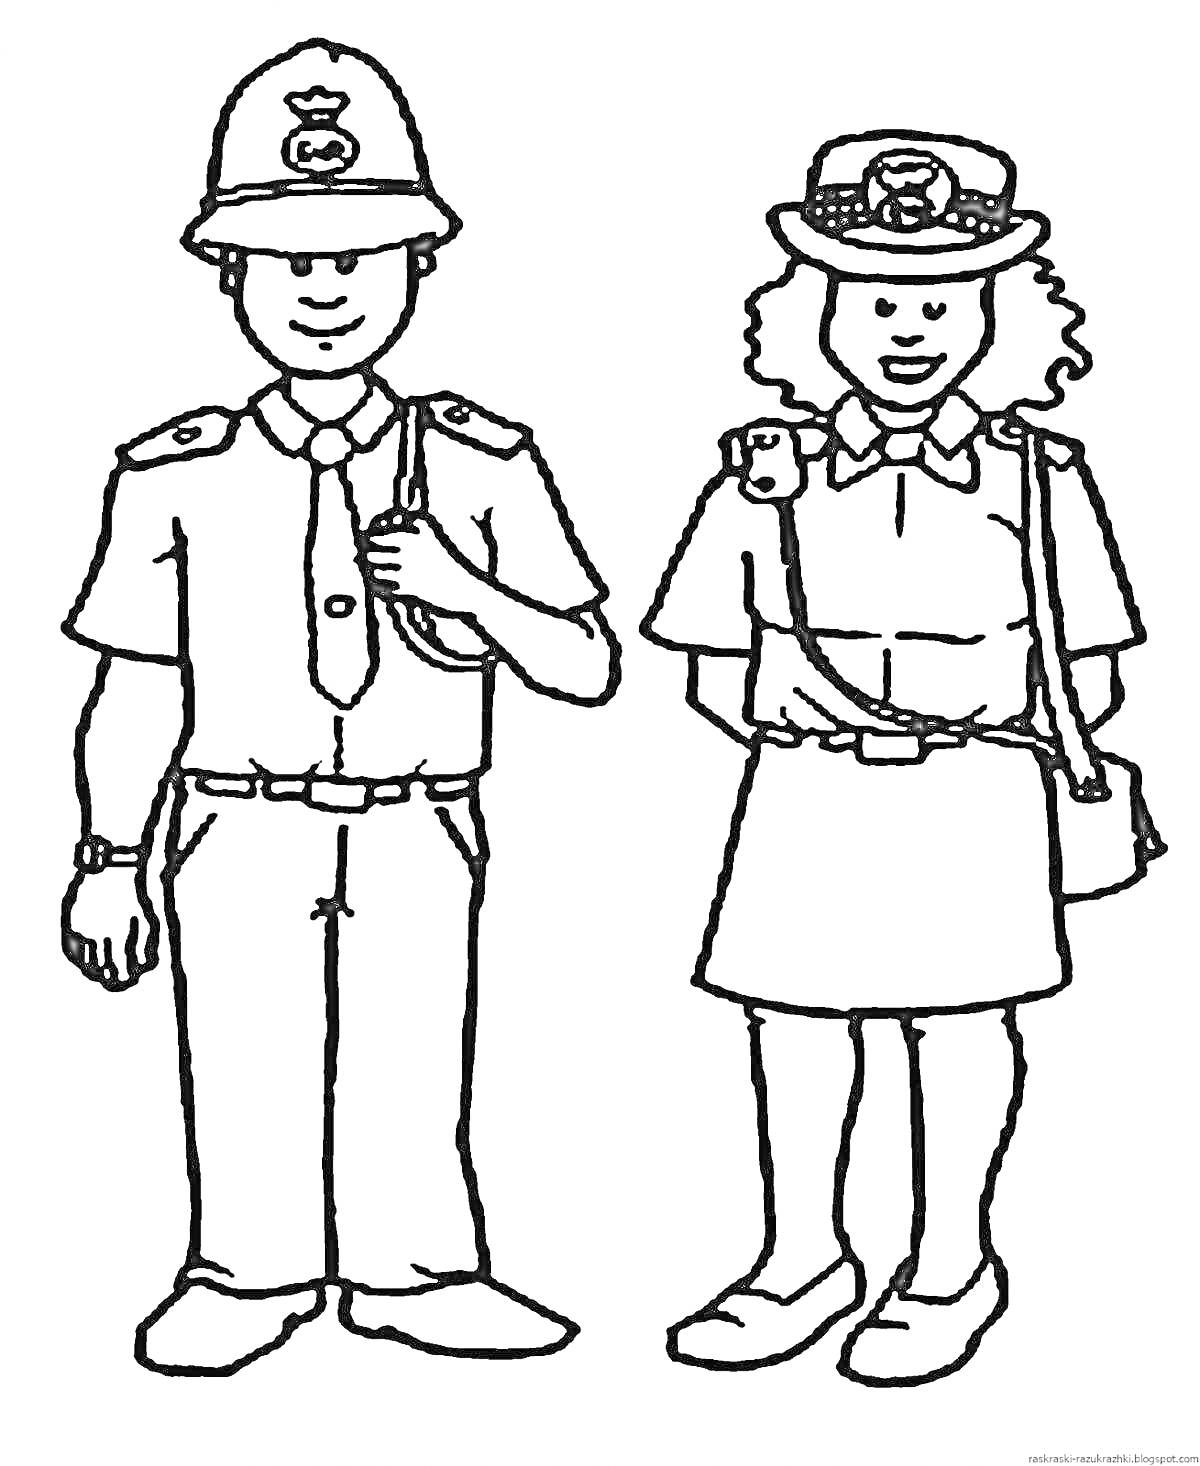 Раскраска Полицейские - мужчина и женщина с рациями